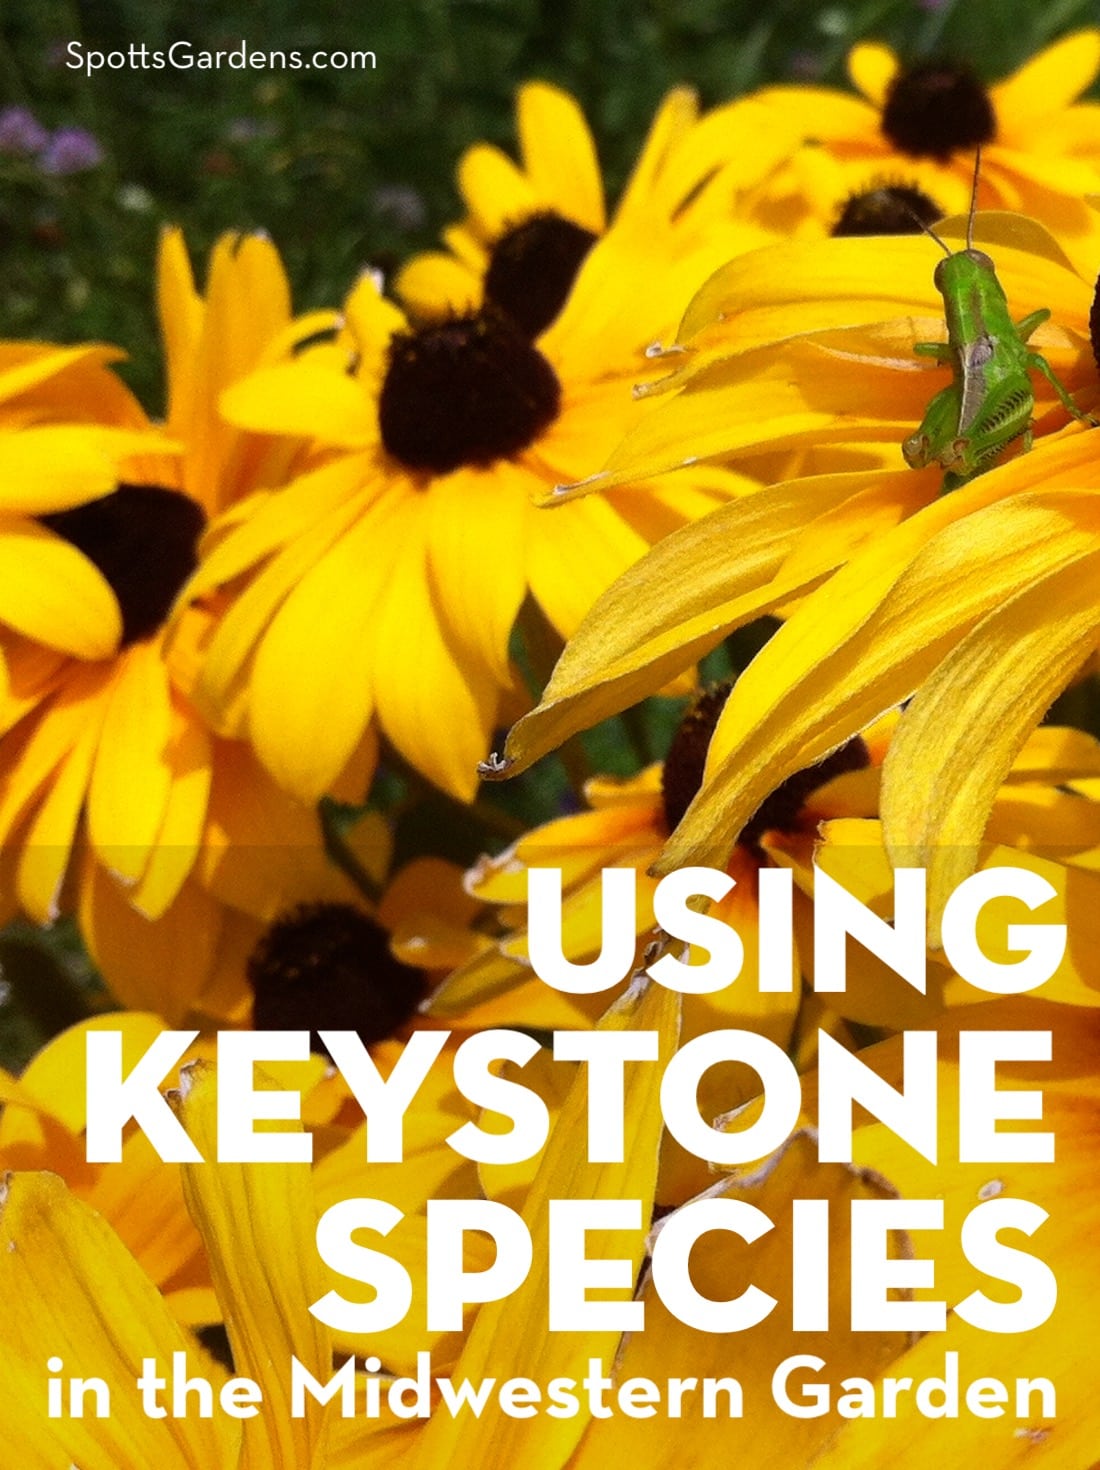 Keystone Species: 4 Plants Every Garden Should Have